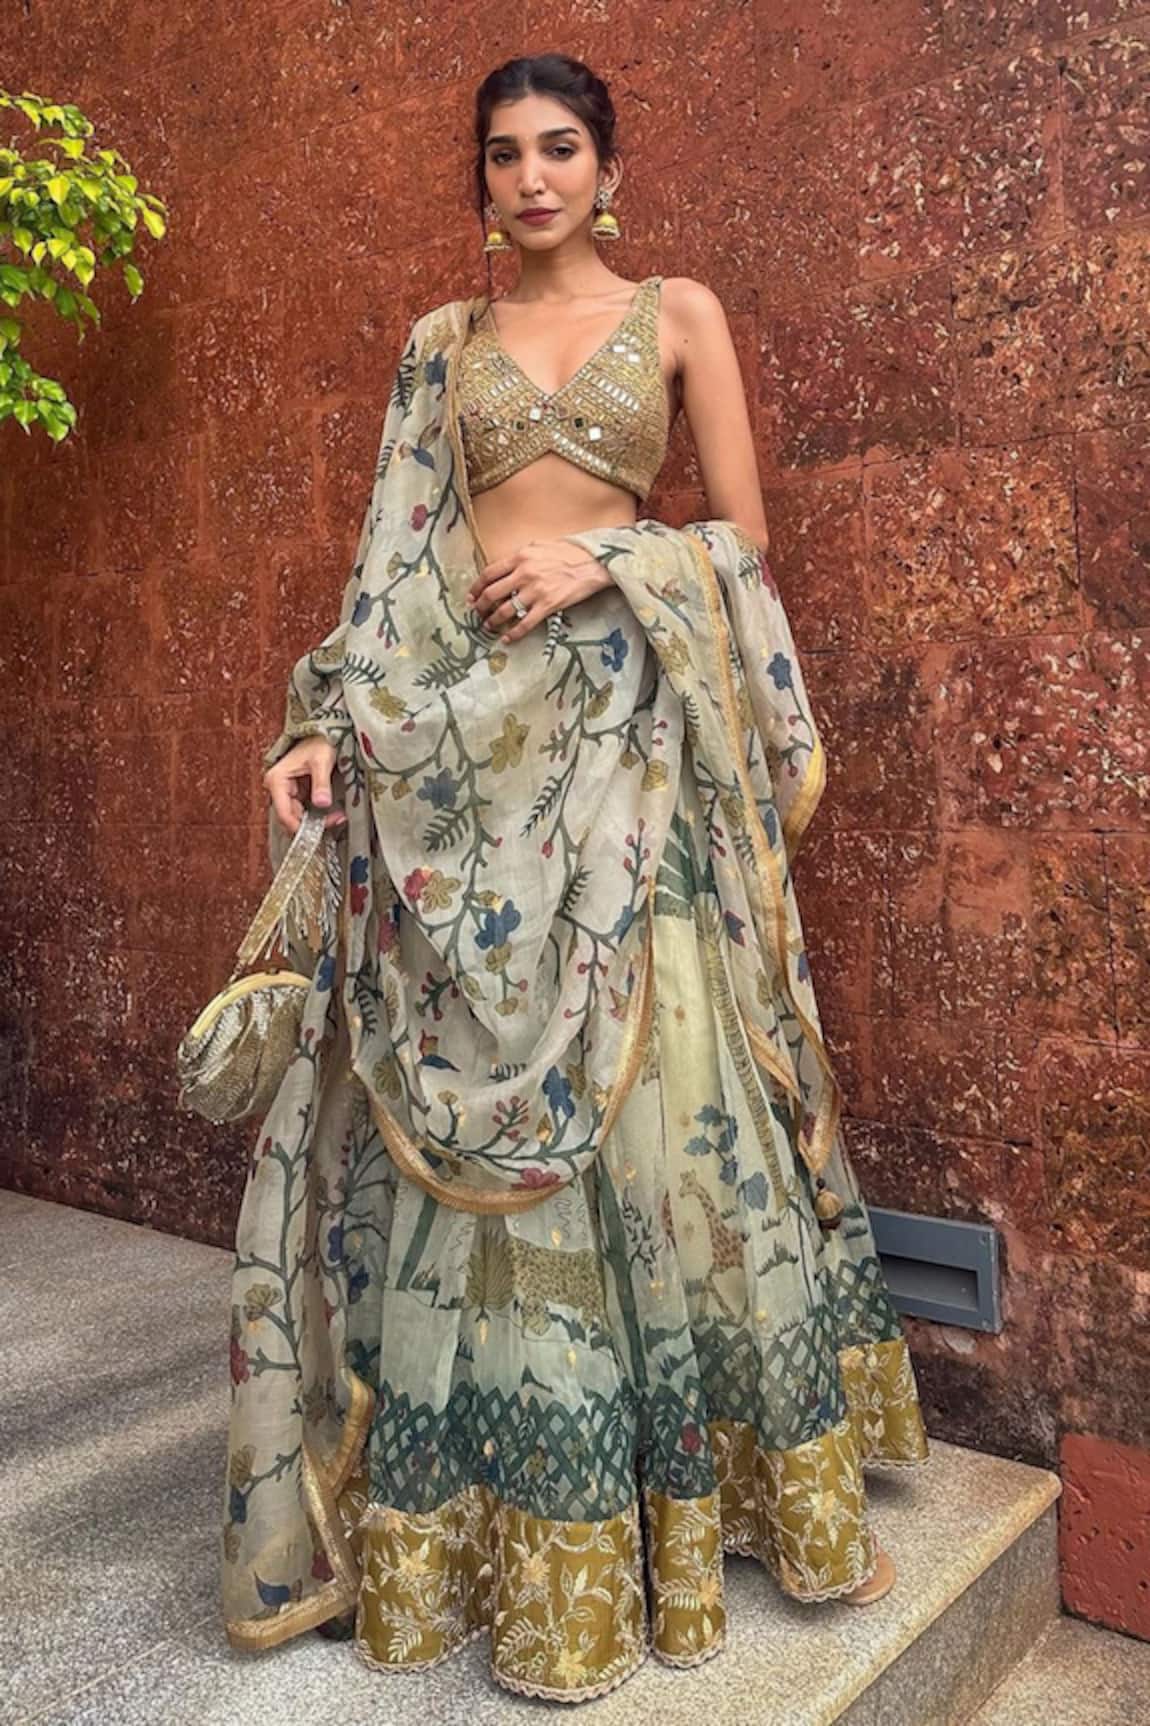 Where can I get the latest designer Indian wedding lehenga? - Quora